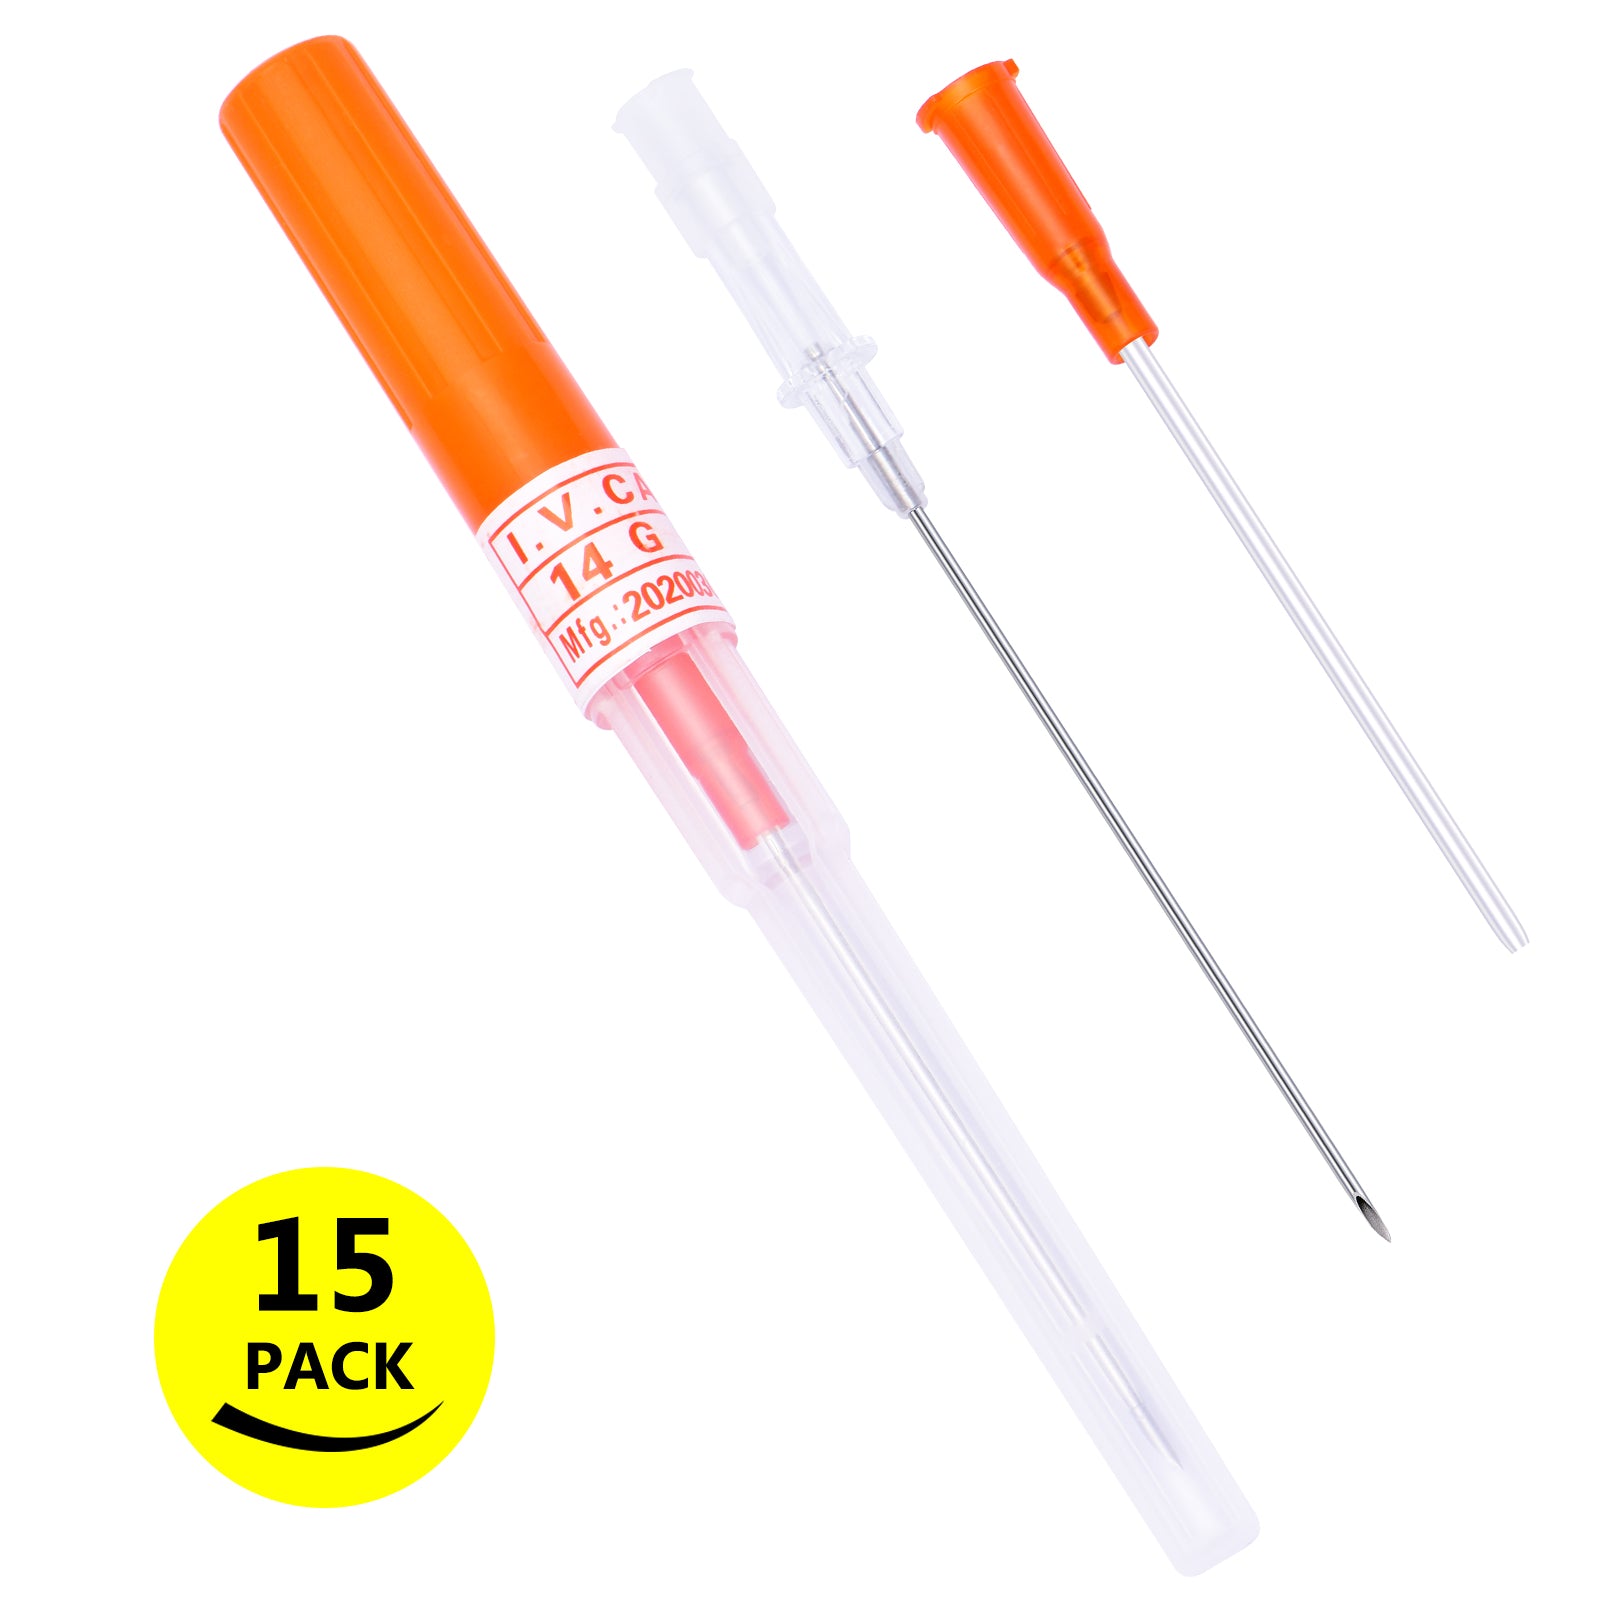 15PCS Mixed Catheter Piercing Needles,14G 16 18G 20G 22G Disposable Stainless Steel Needles Piercing for Belly Navel Lip Eyebrow Navel Earrings Piercing